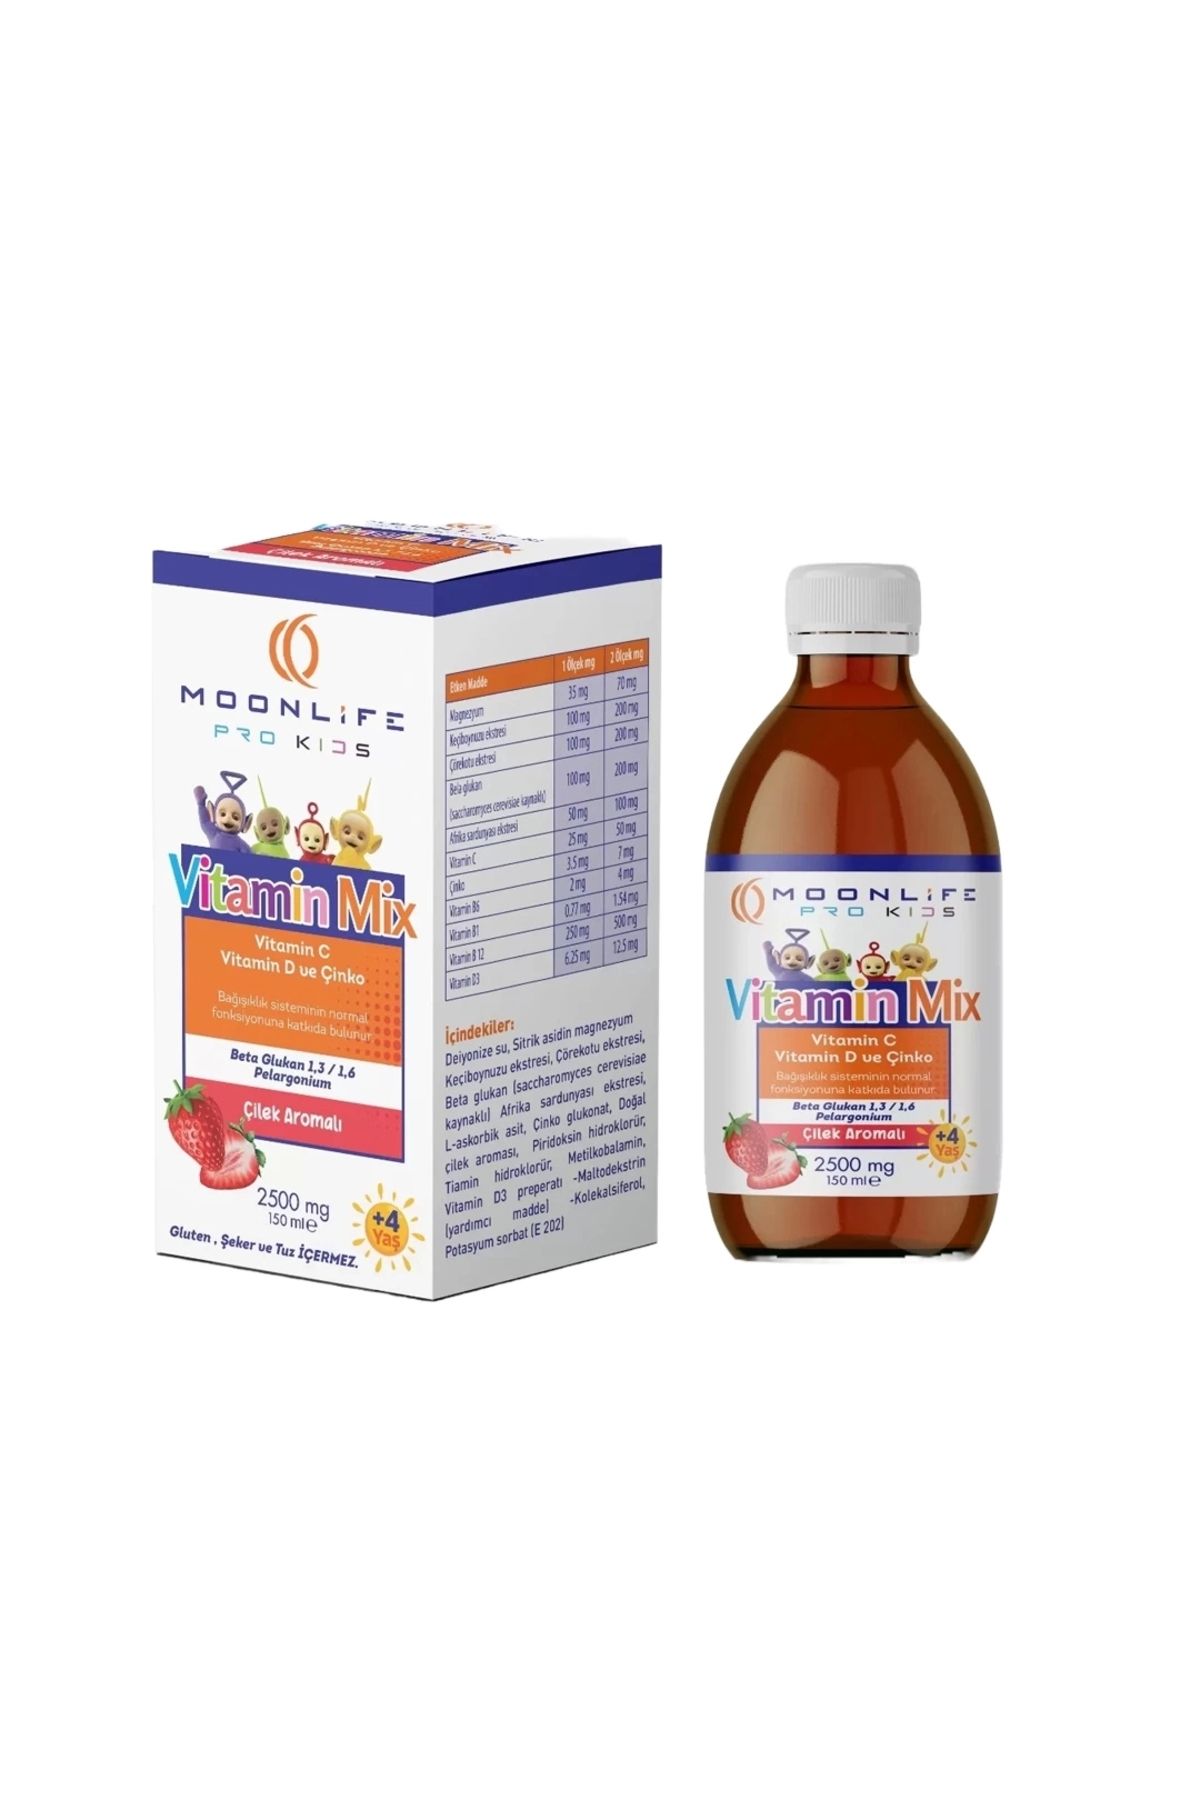 Moonlife Moon Life Pro Kids Vitamin C Ve D Çinko Beta Glukan 1,3 1,6 Çilek Aromalı ( Lipozomal )150 Ml